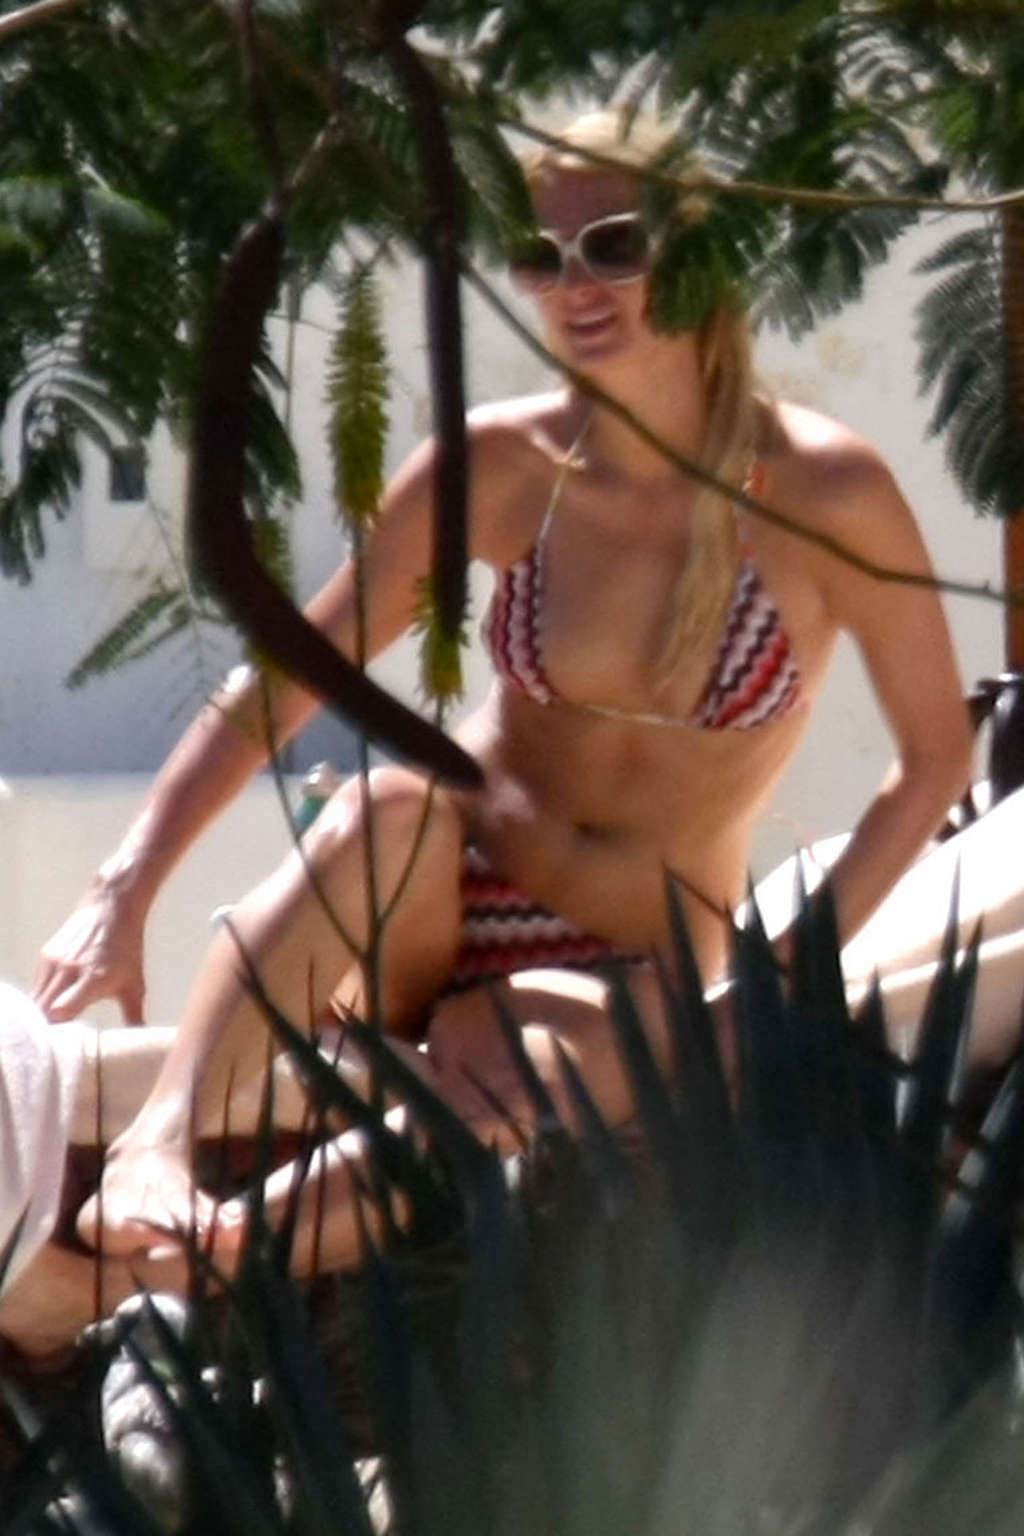 Paris Hilton enjoying on pool in topless very hot photos #75356425